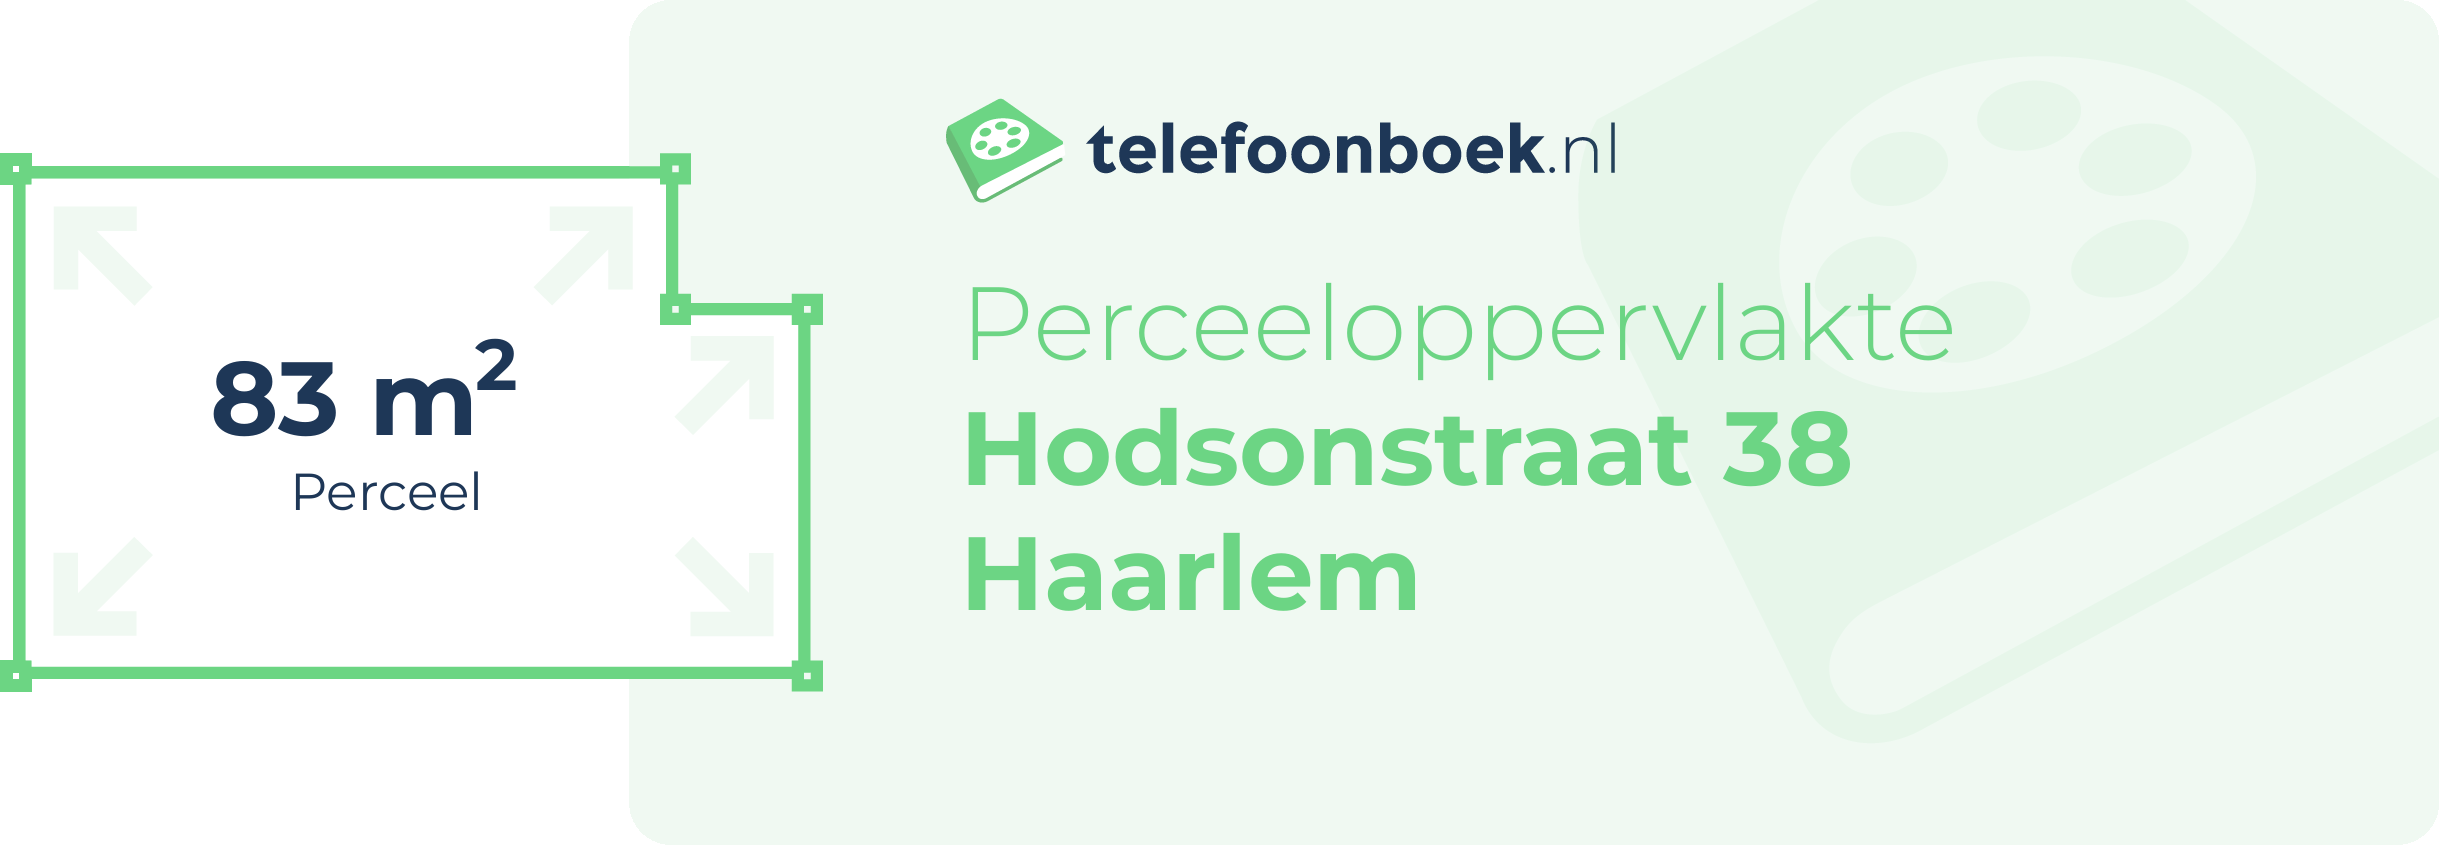 Perceeloppervlakte Hodsonstraat 38 Haarlem